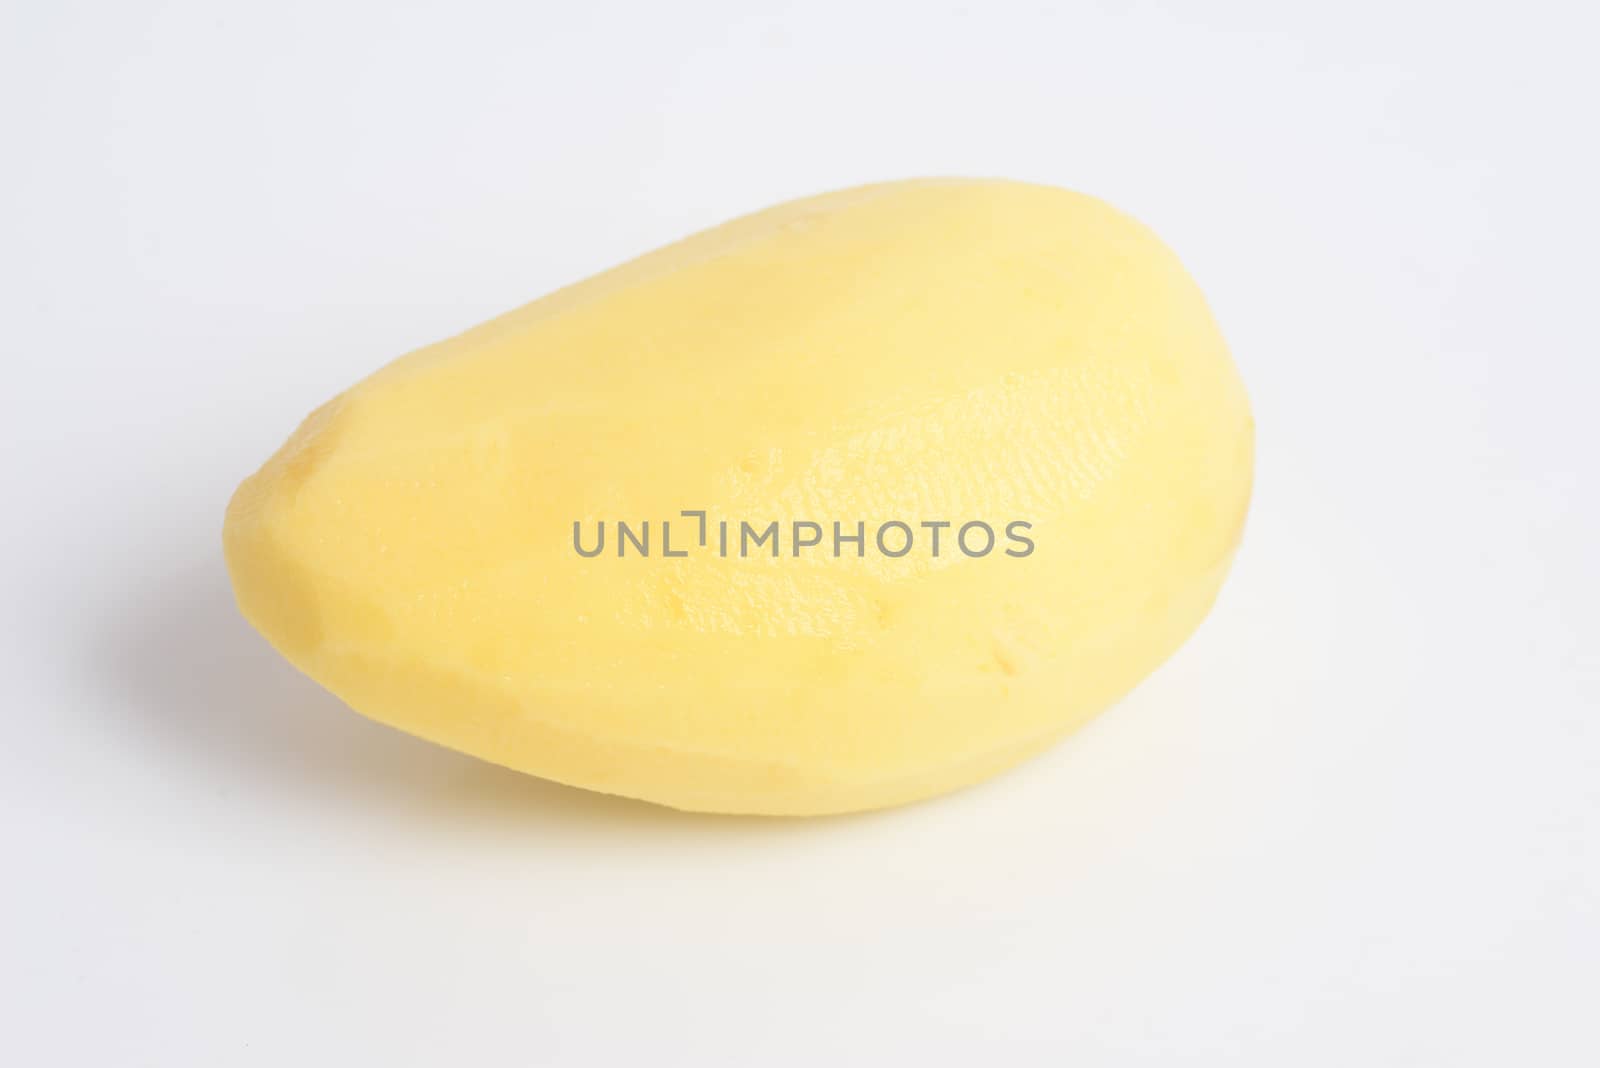 Raw peeled potato on white background